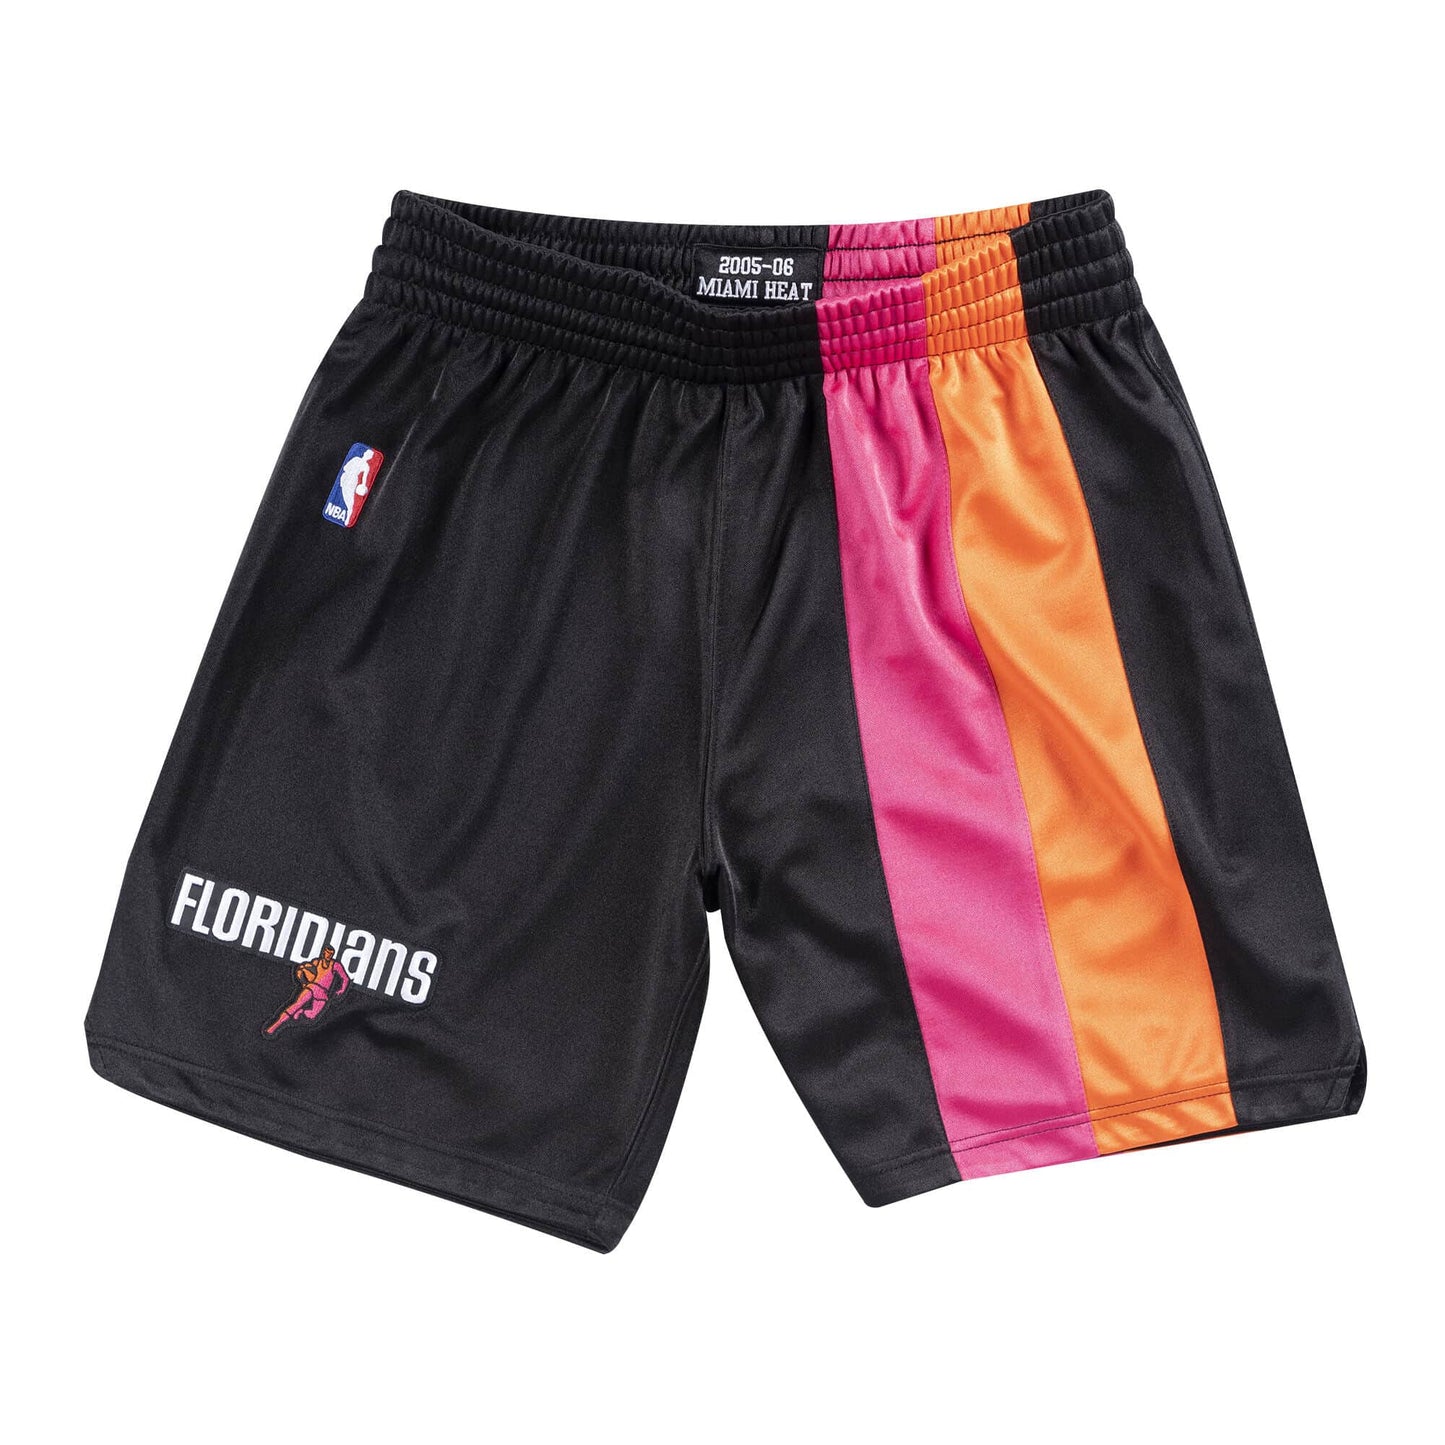 NBA Authentic Shorts Miami Heat Alternate 2005-06